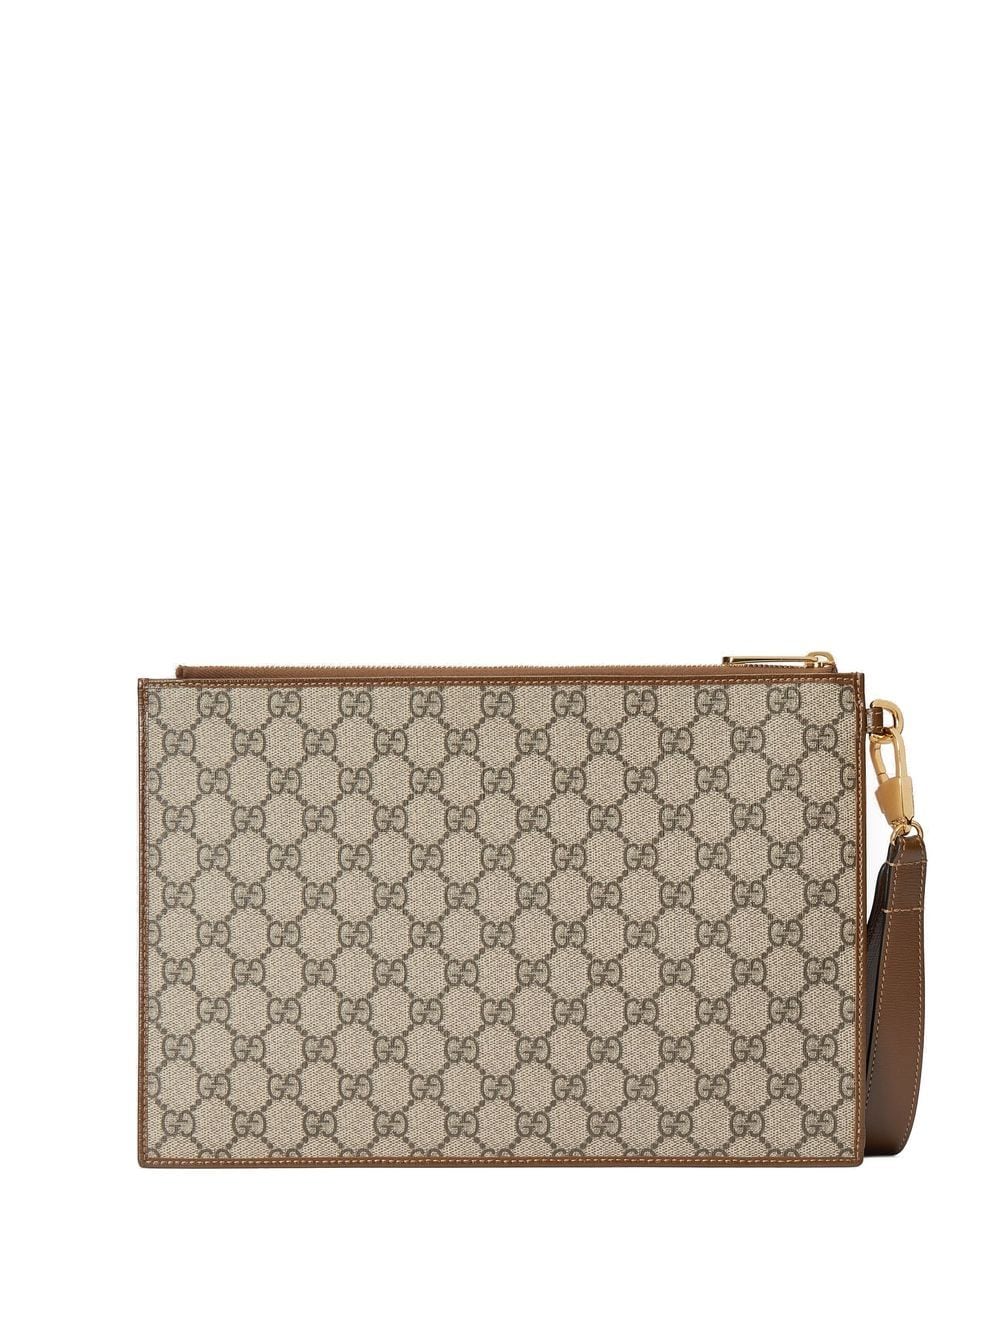 Gucci Jacquard Monogram Clutch Bag - Farfetch